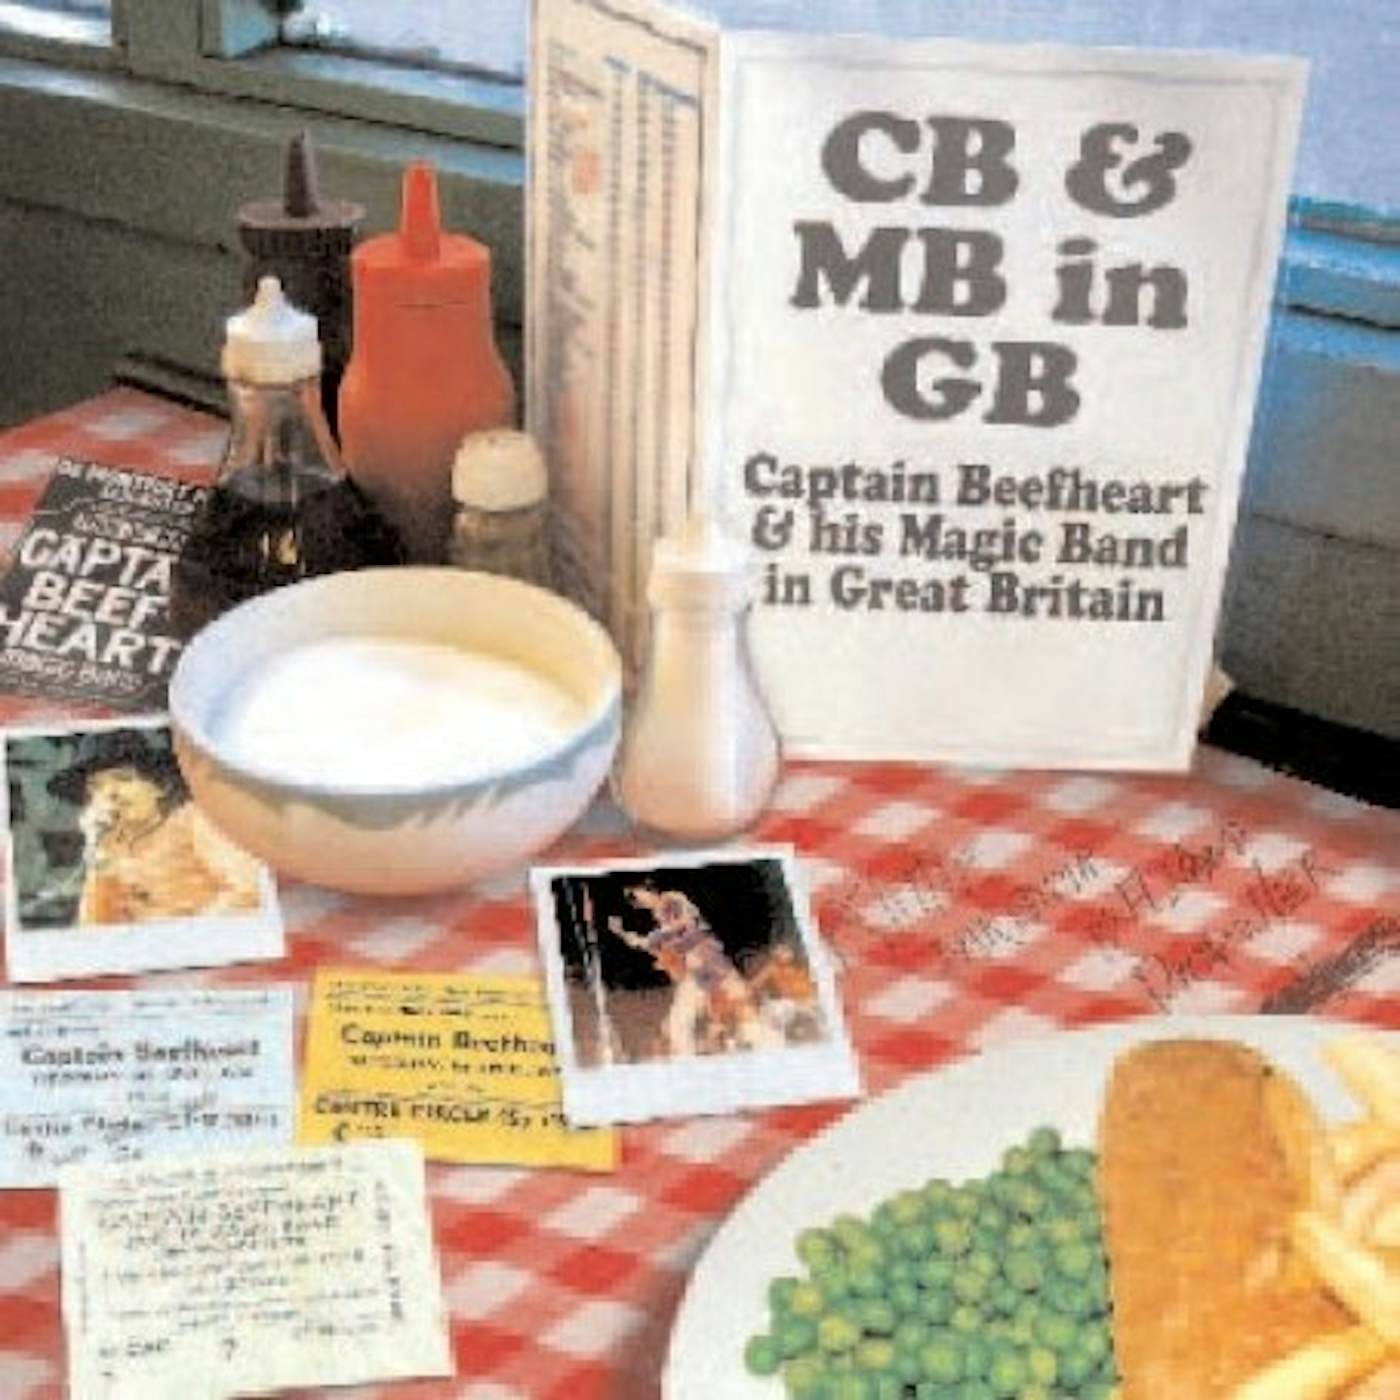 Captain Beefheart & His Magic Band CB & MB LIVE IN GB CD